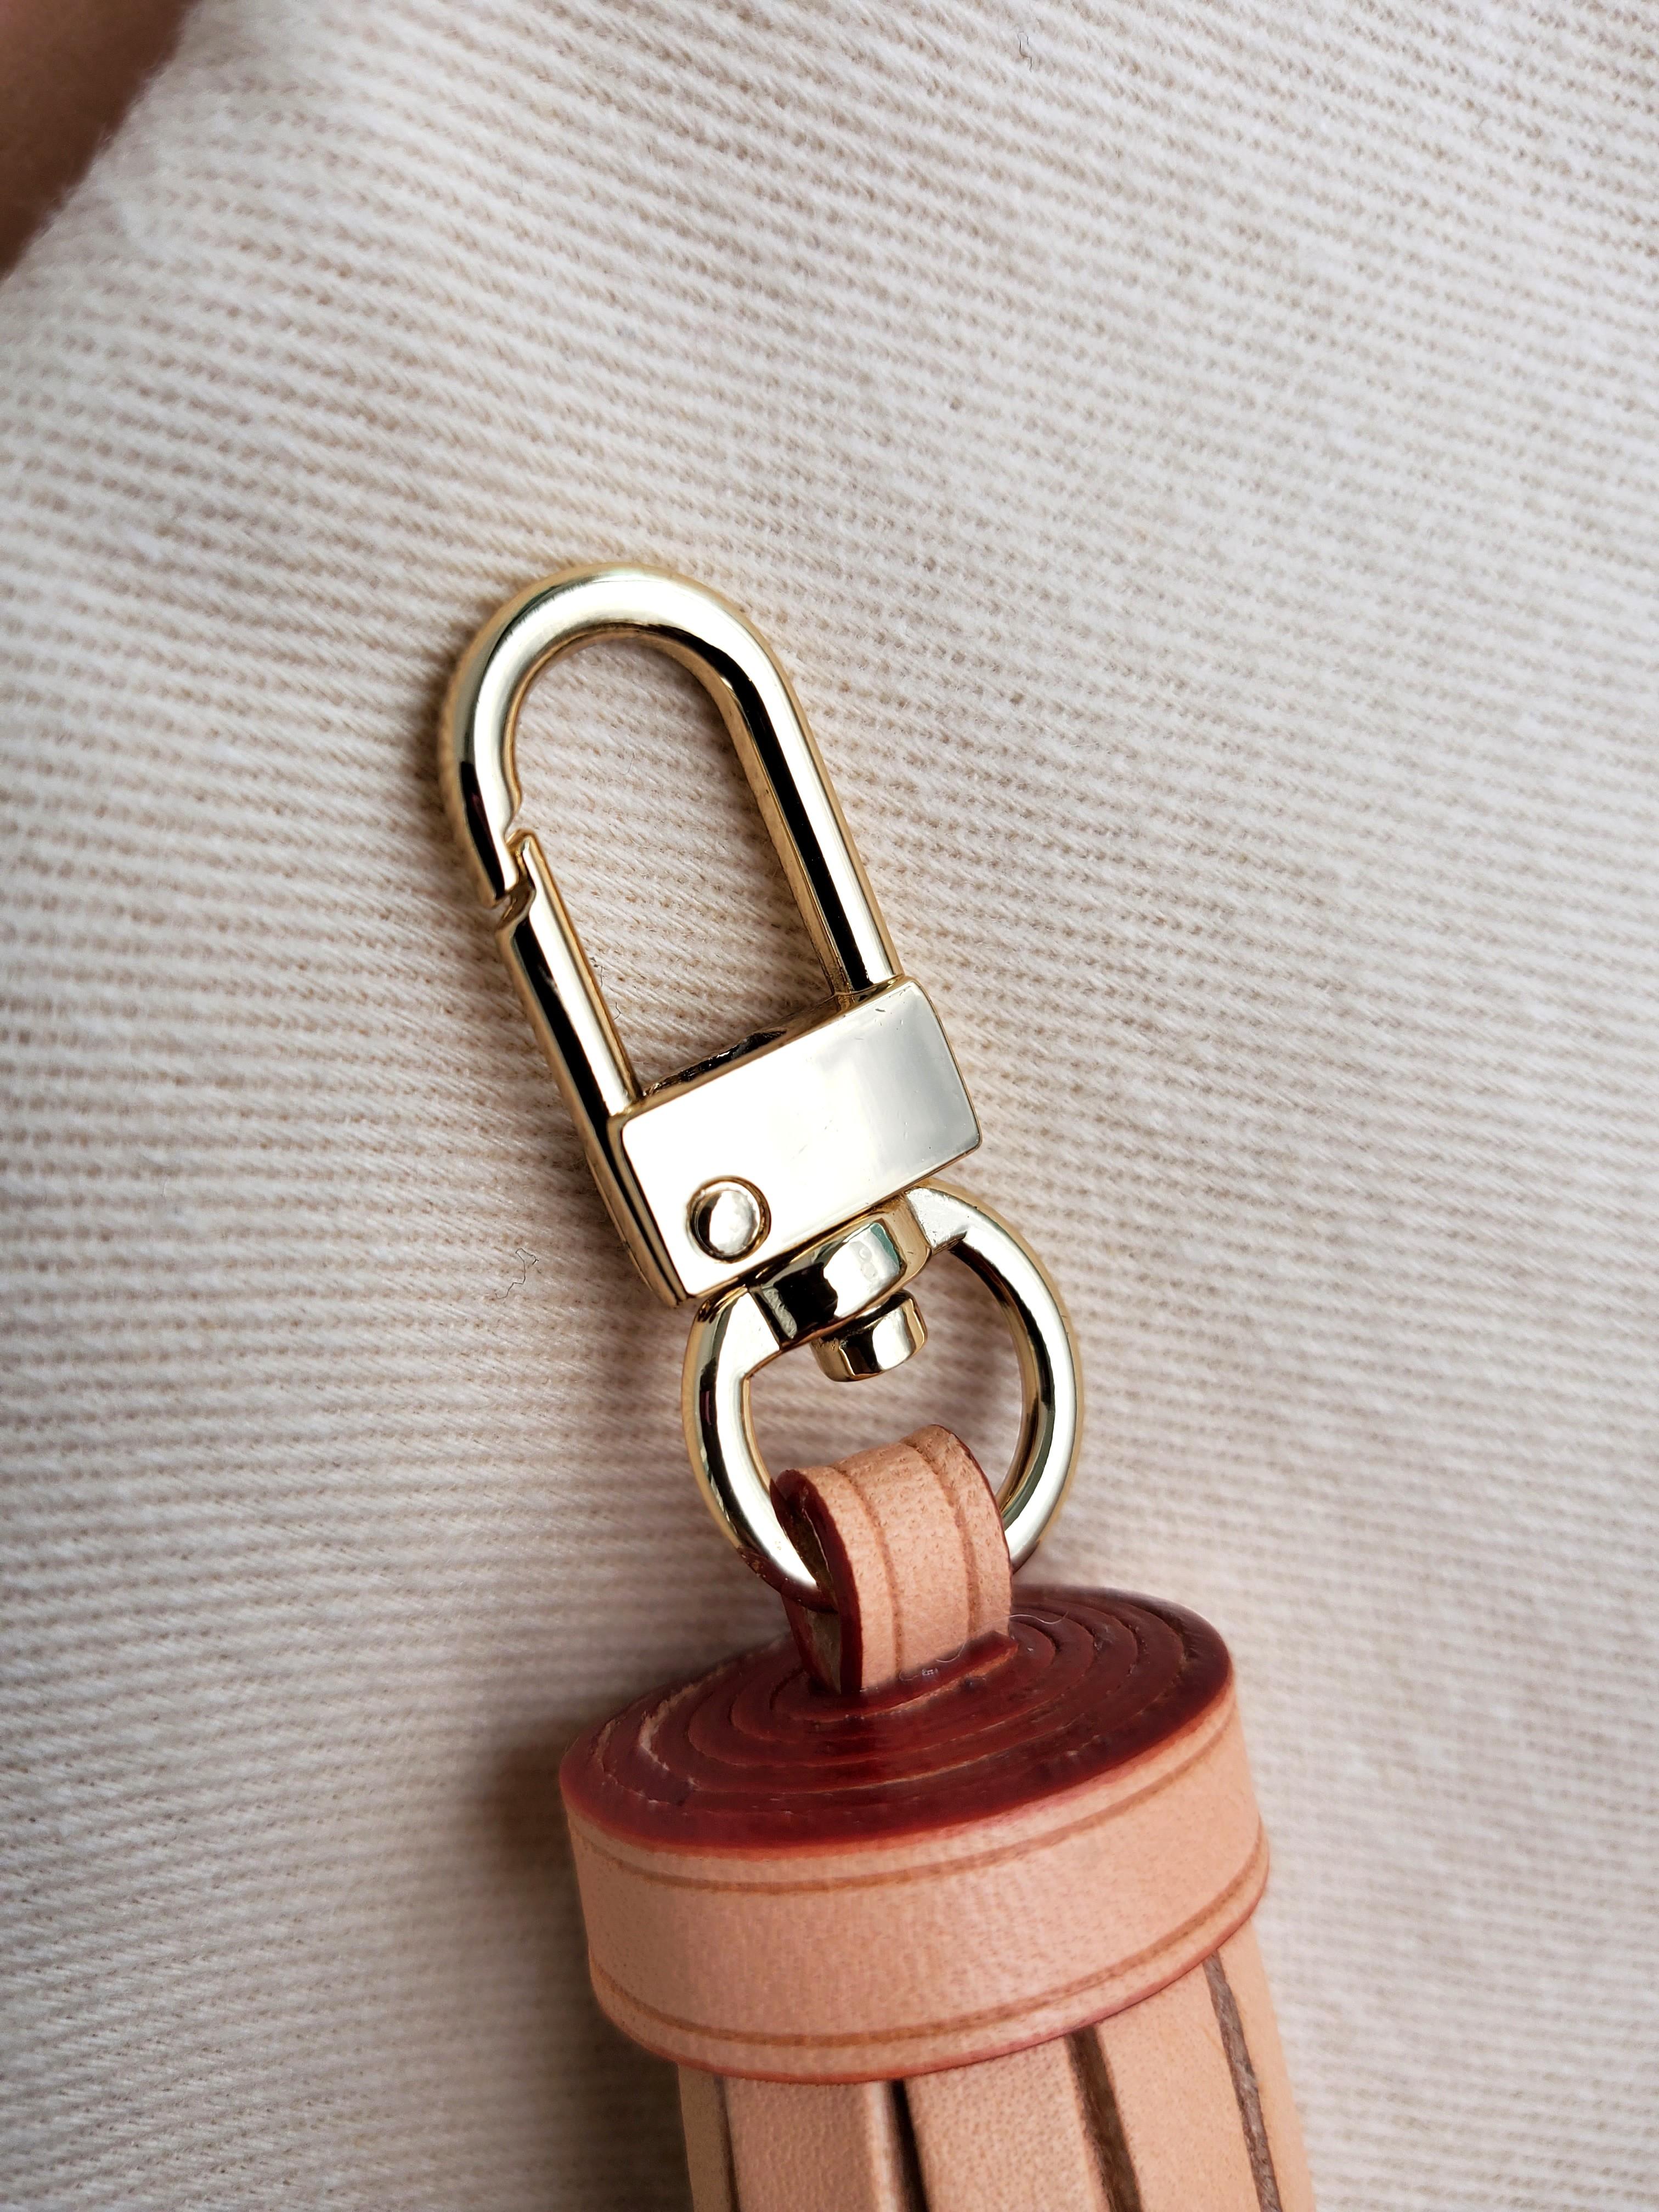 Purse Accessory - Luxury Vachetta Leather Keychain Accessory Charm